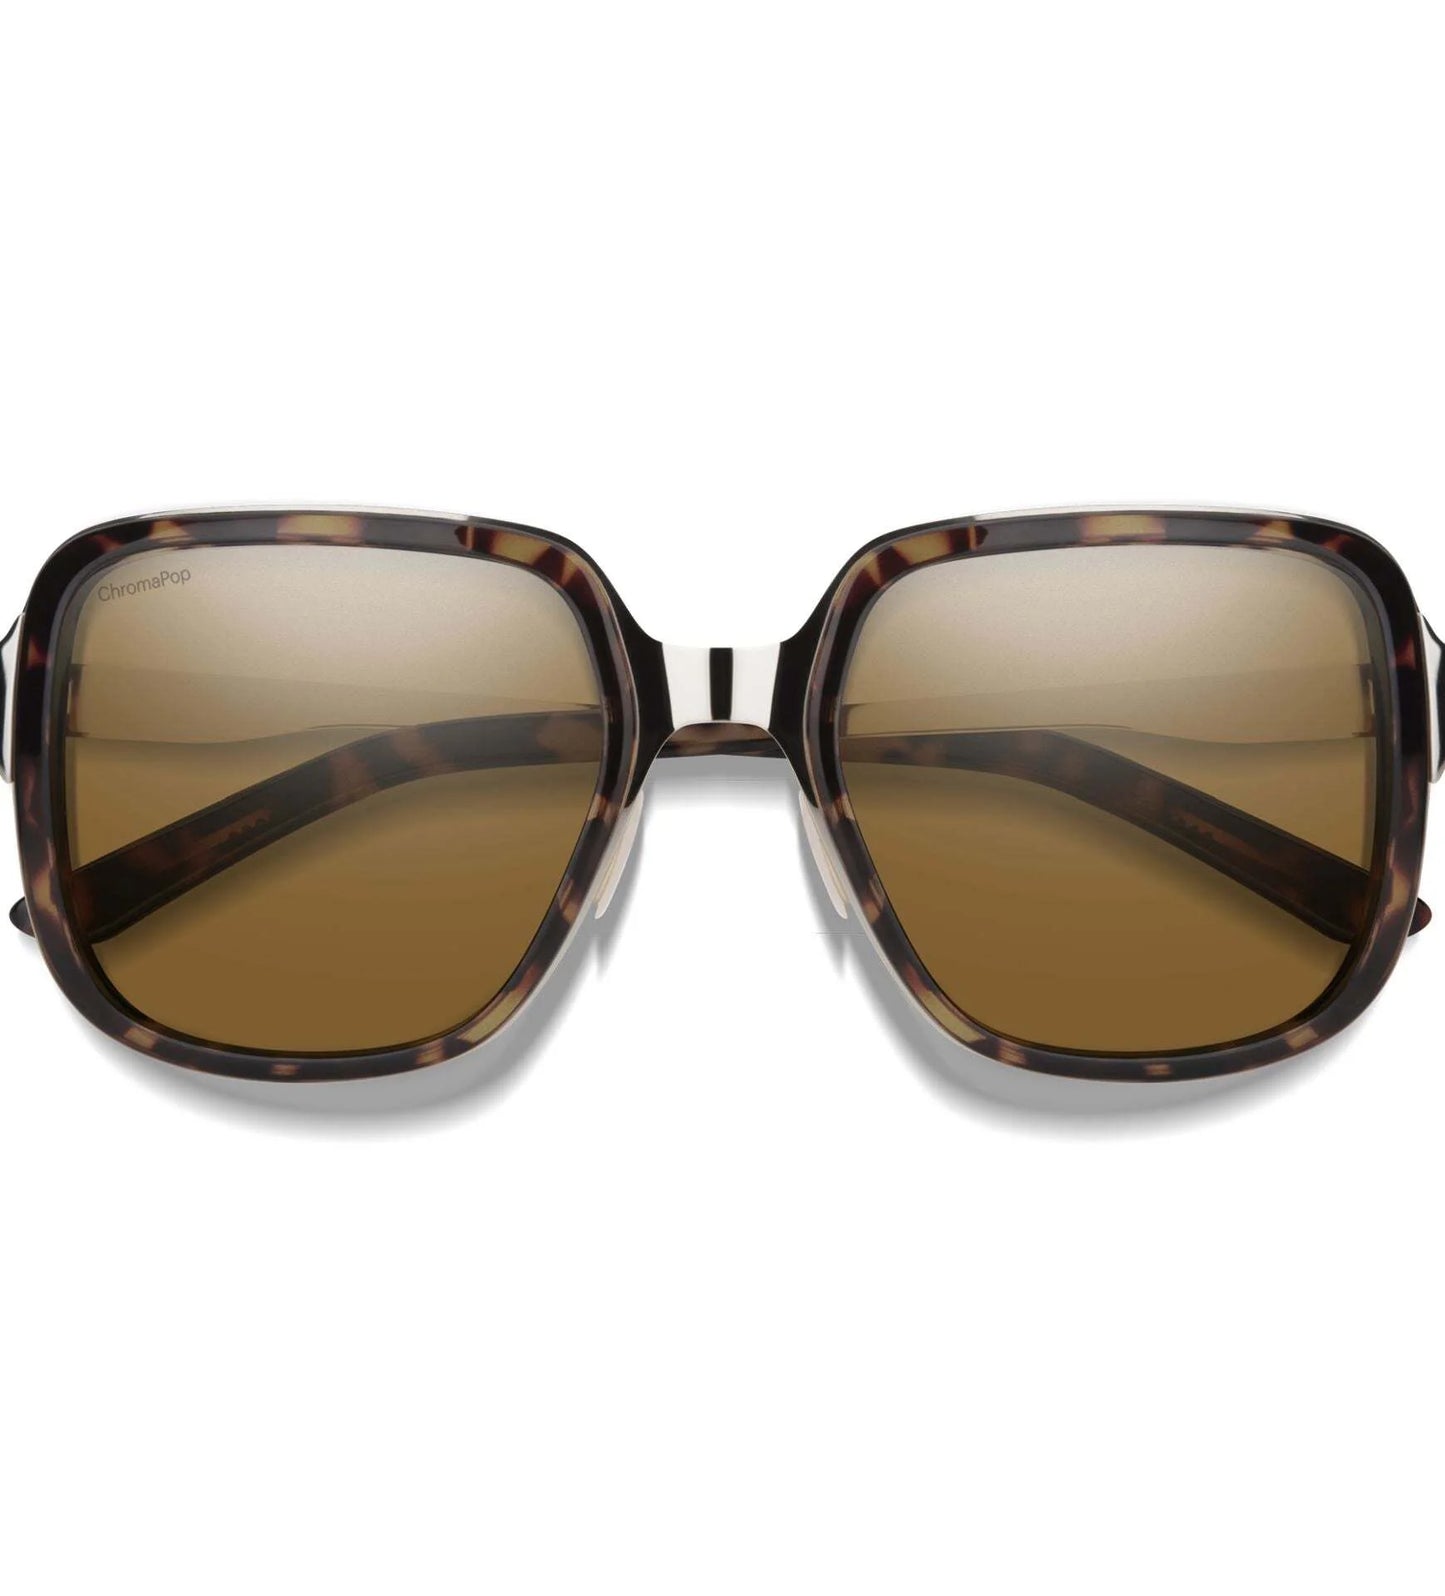 Smith Optics Aveline Sunglasses